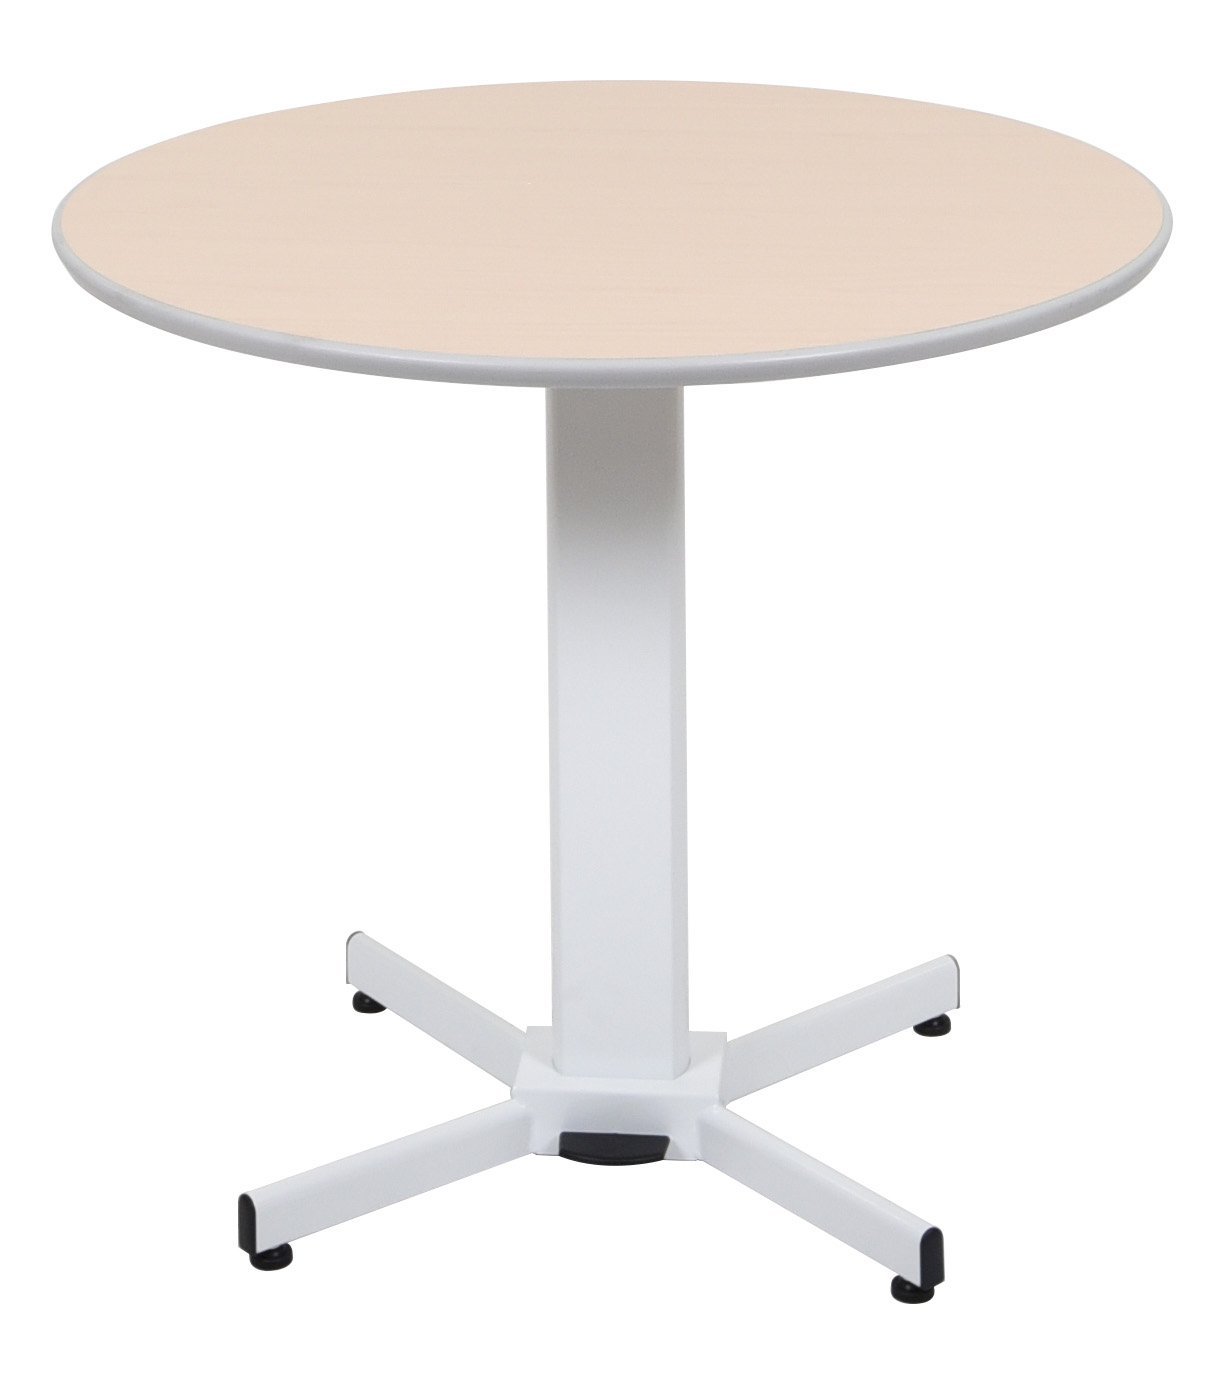 Luxor - LX-PNADJ-ROUND - Pneumatic Adjustable Round Pedestal Table.